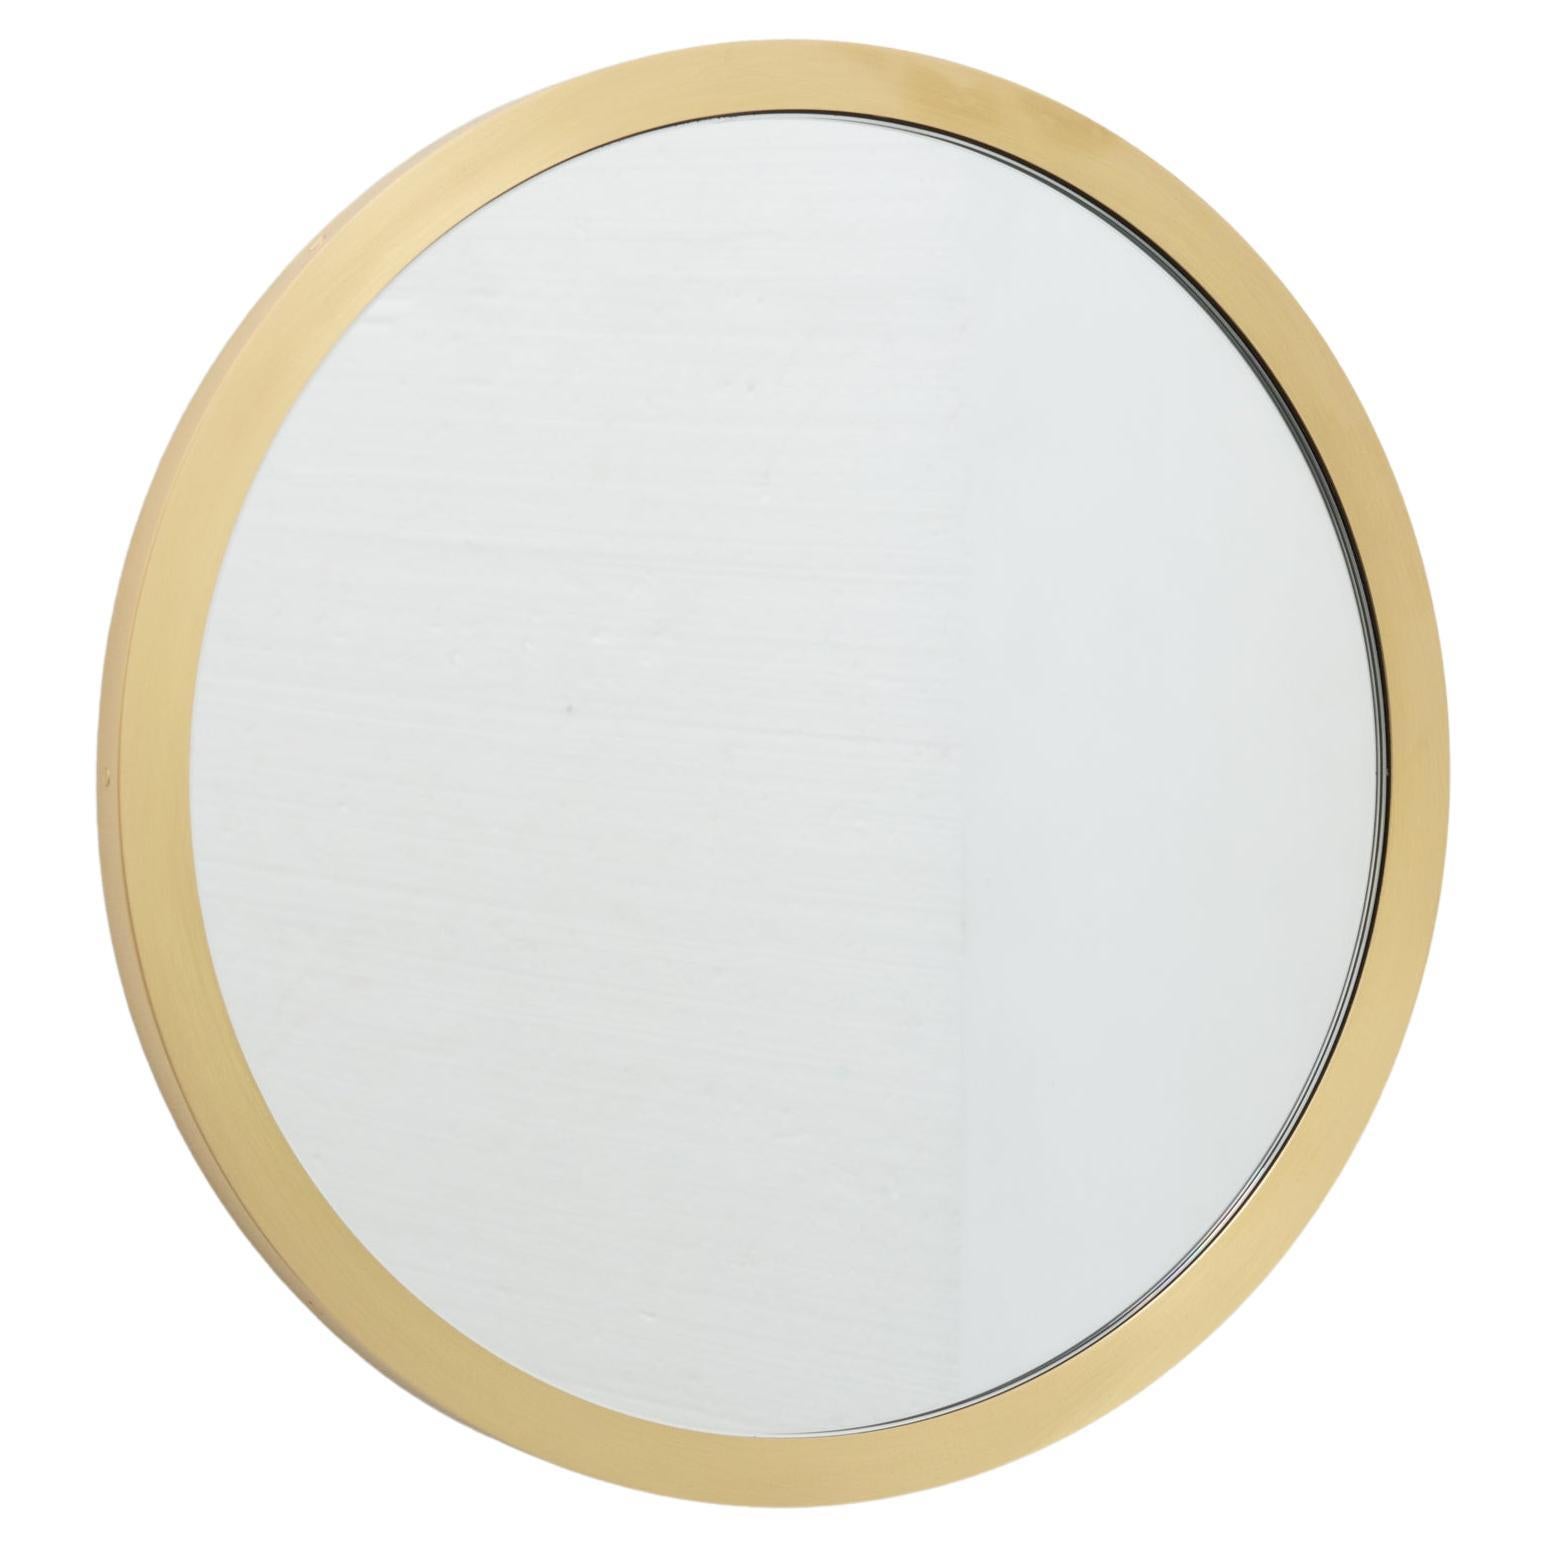 Orbis Round Mirror with Modern Full Brushed Brass Frame, XL